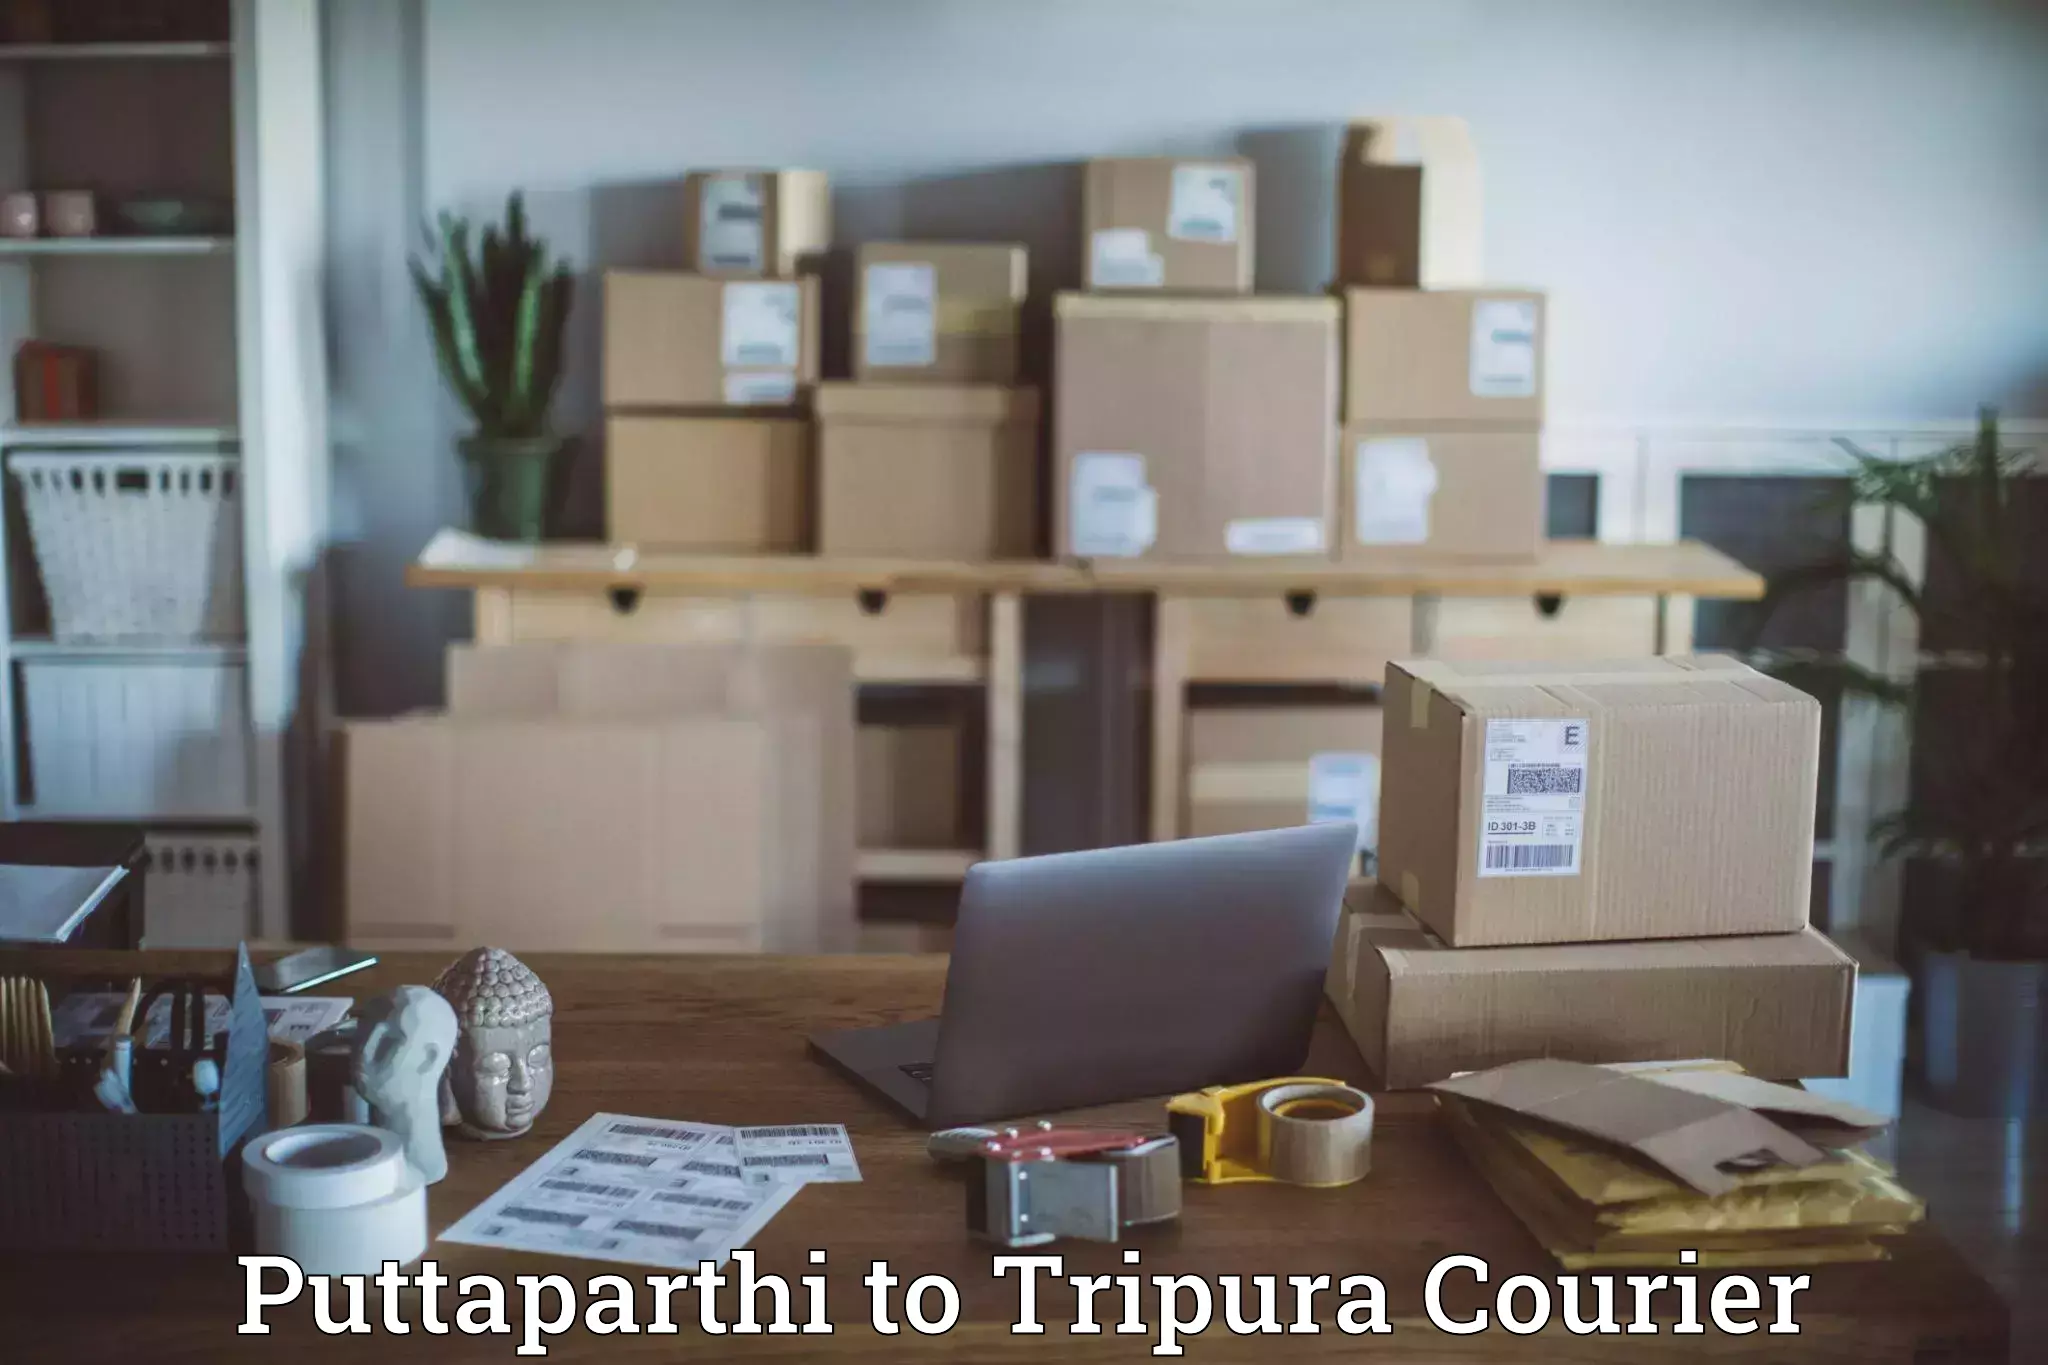 Courier service comparison Puttaparthi to South Tripura